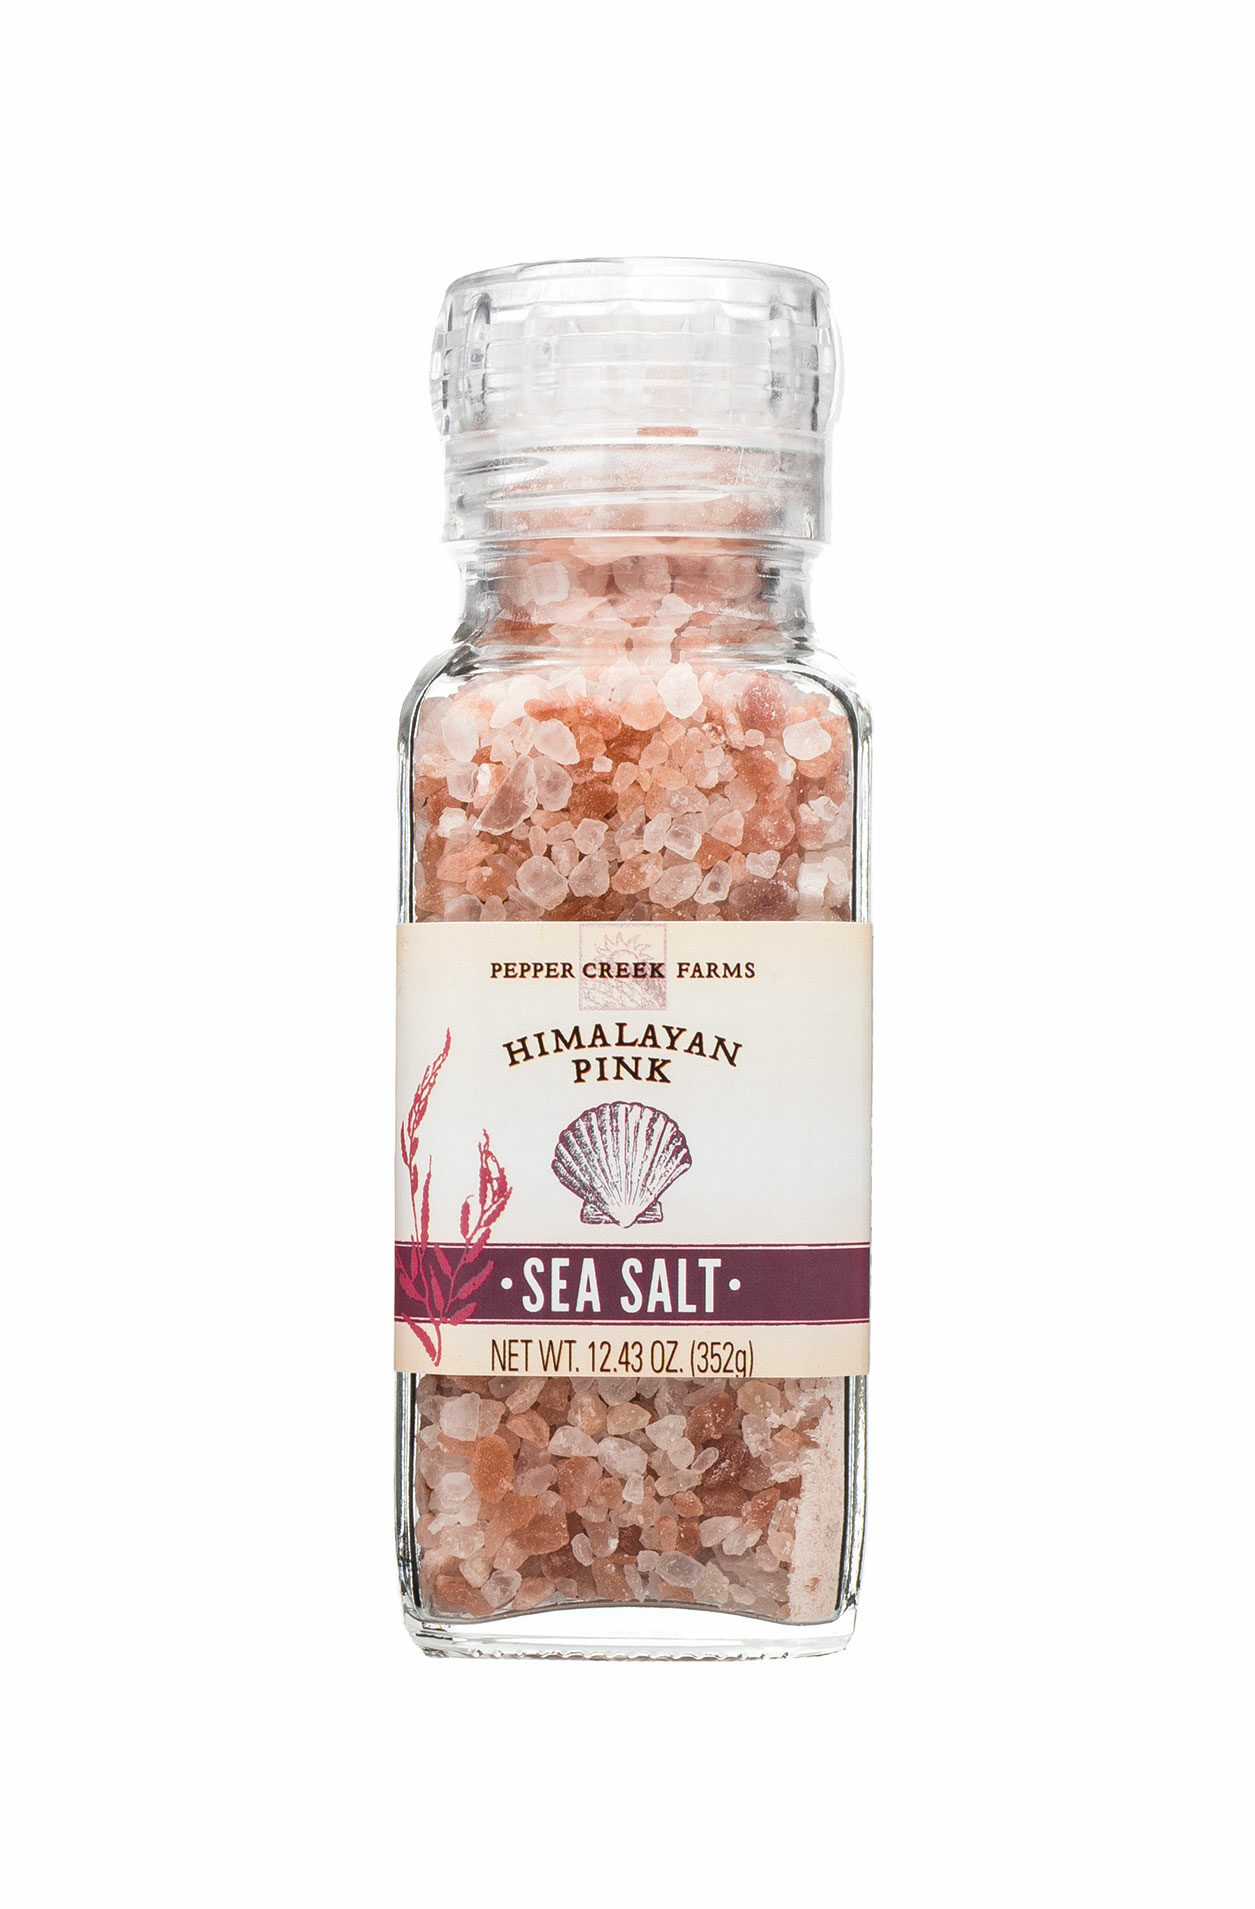 https://peppercreekfarms.com/wp-content/uploads/2017/08/Himalayan-Pink-Sea-Salt-Large-Grinder-1-e1688286950635.jpg